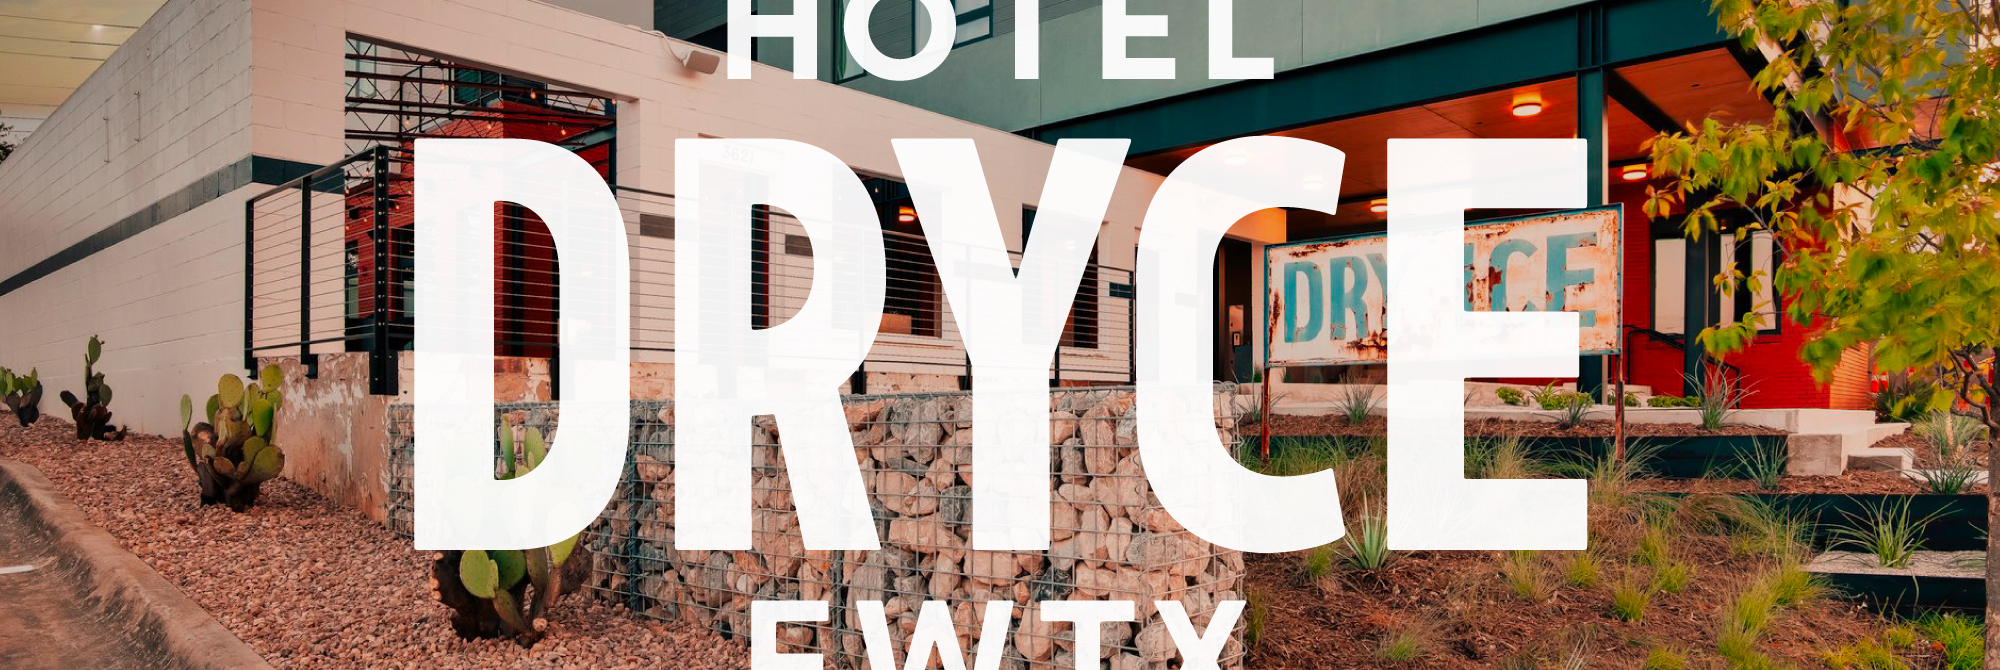 Hotel Dryce Hospitality Branding Fort Worth Texas